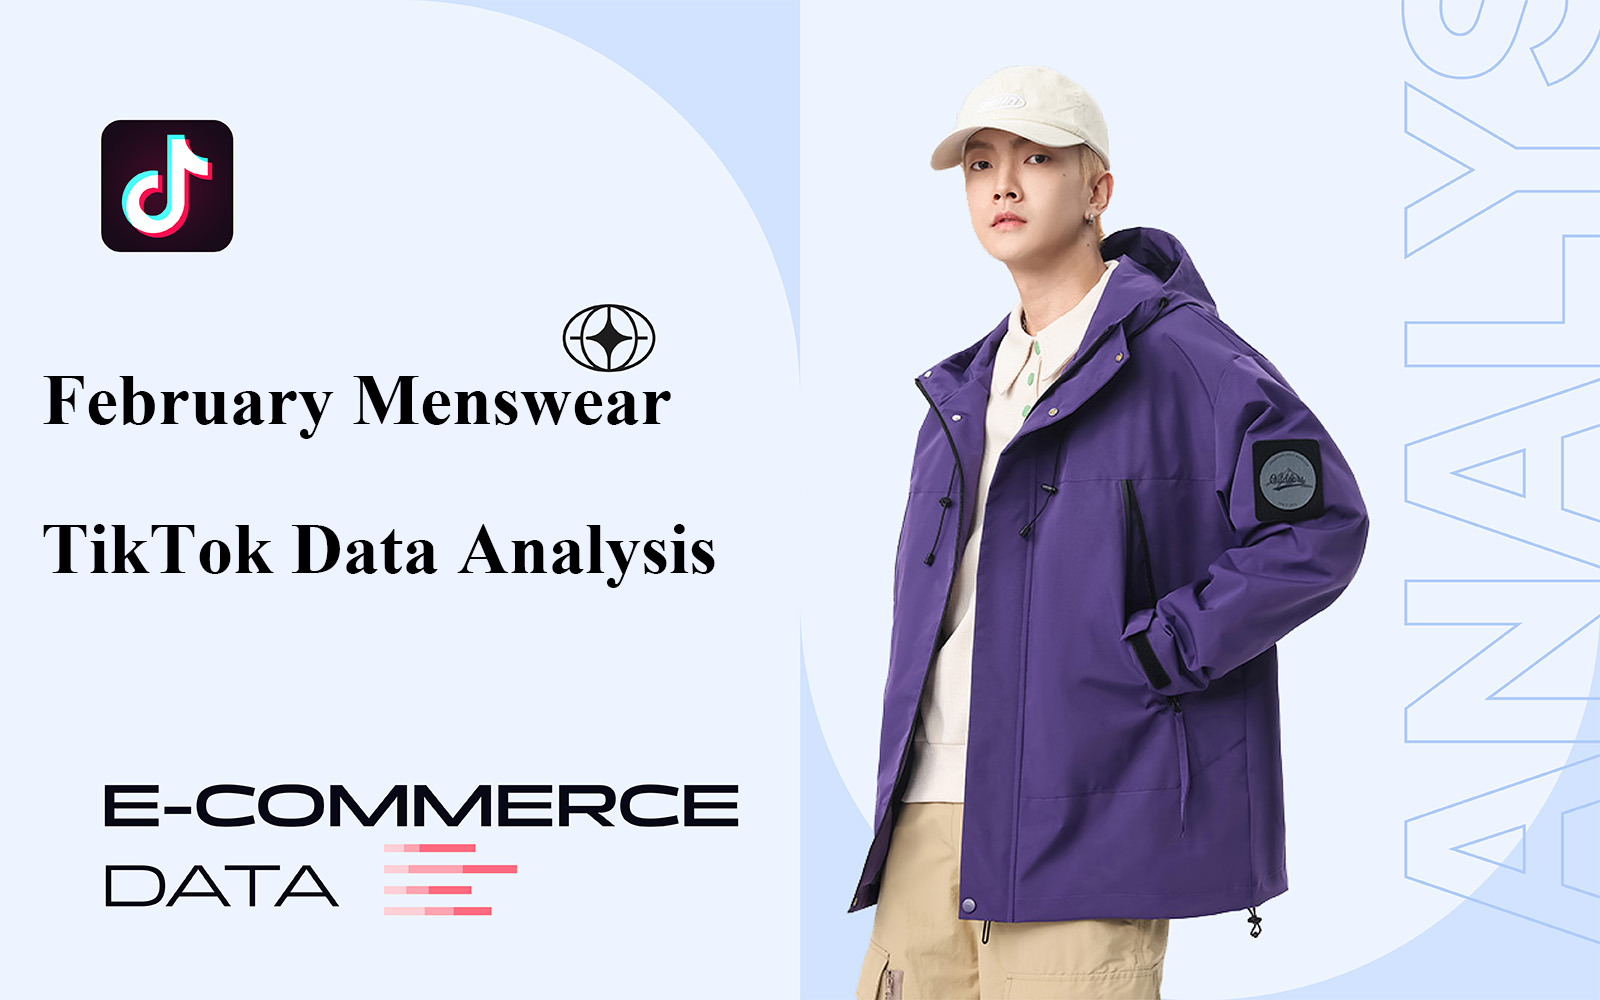 Data Analysis of Tiktok Menswear E-commerce Sales in February